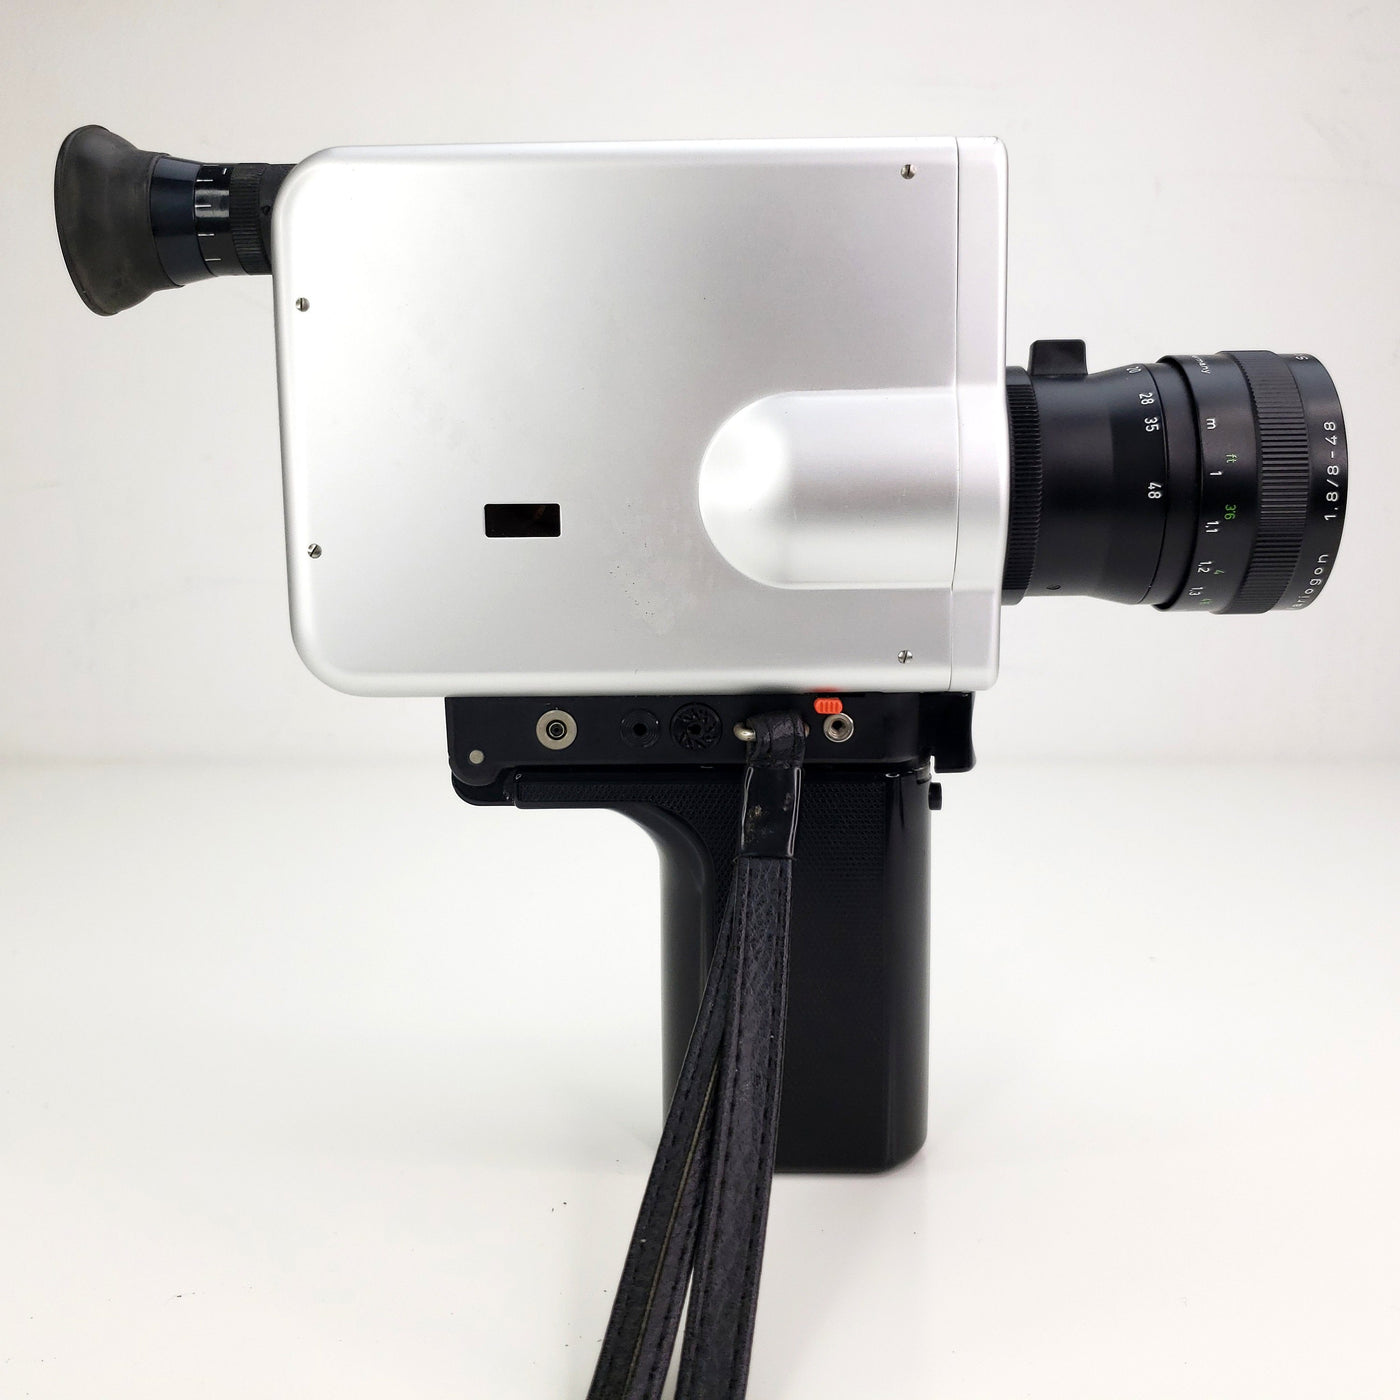 Nizo 481 Macro With Light Meter Adapters for Modern Batteries Super 8 Cameras Braun Nizo 